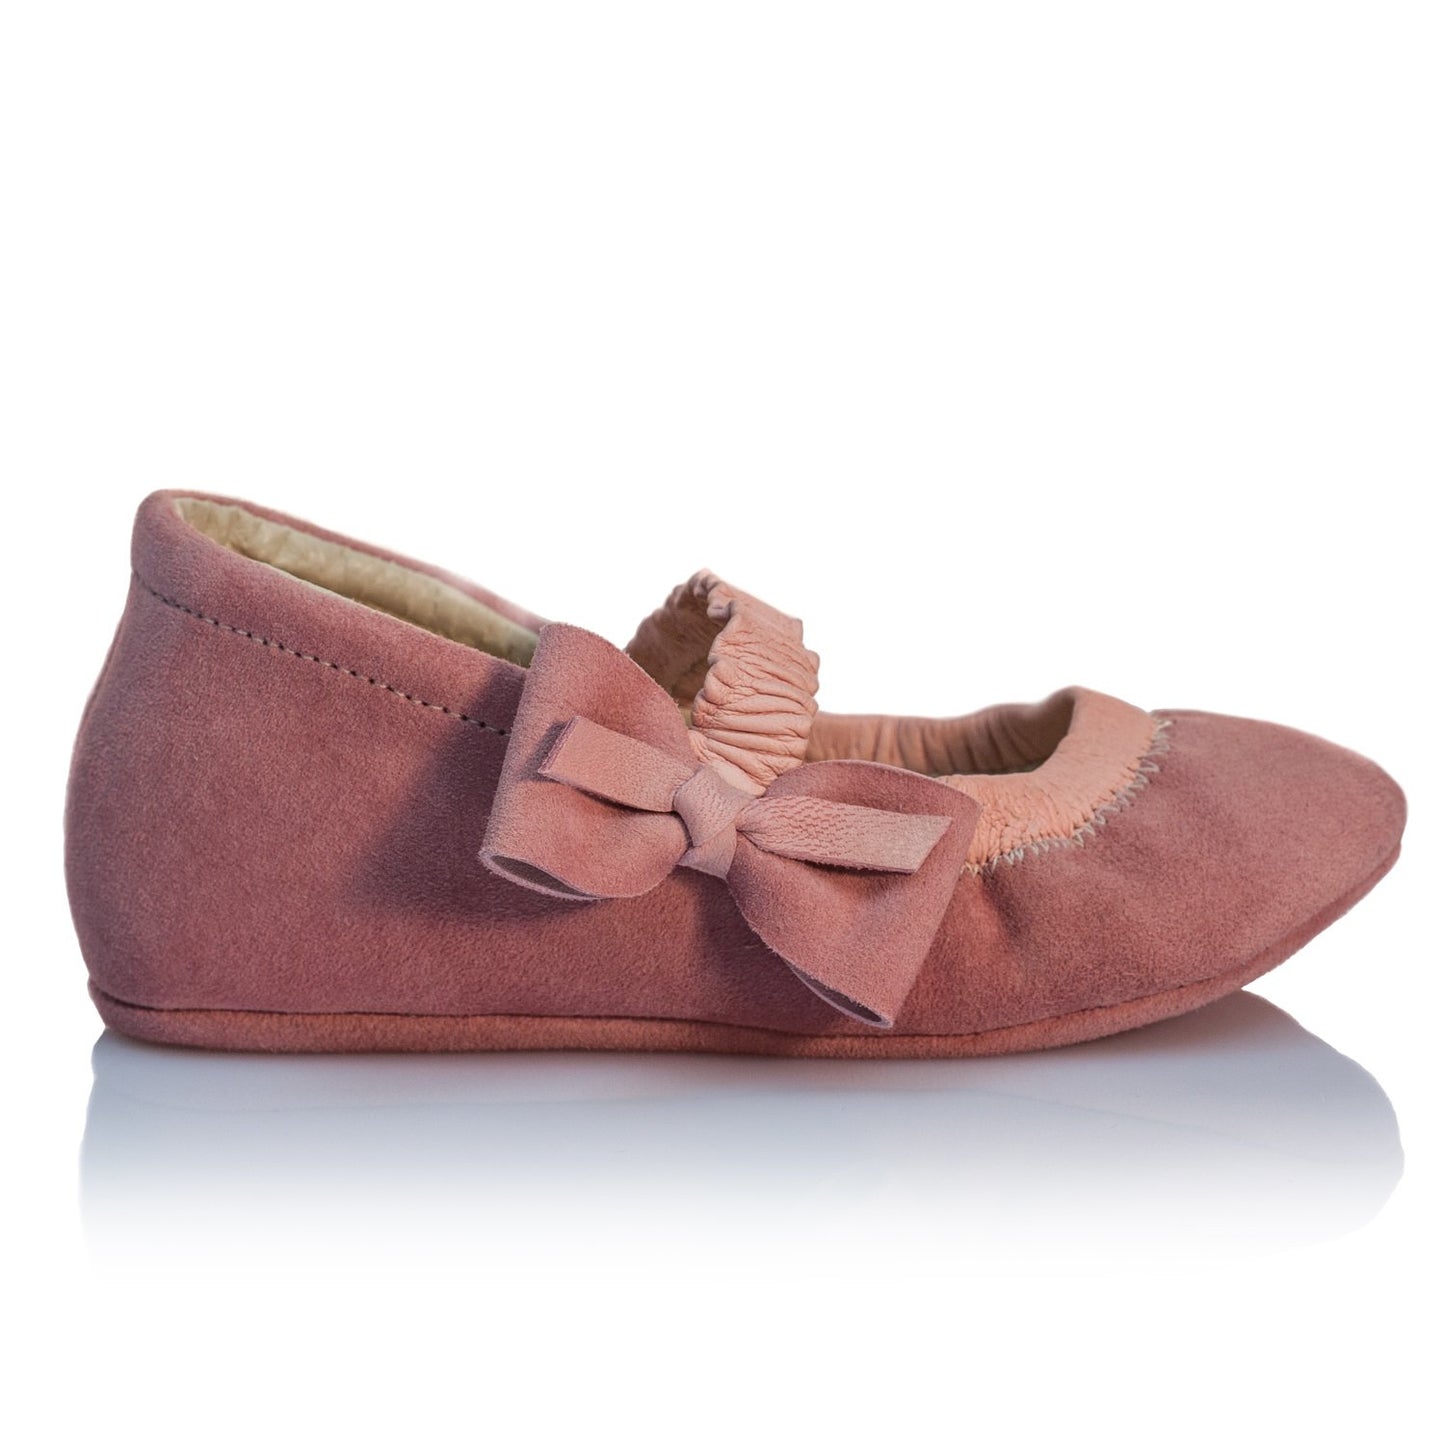 Vibys Barefoot Ballerina Shoes - Kiki Ballerina - side view